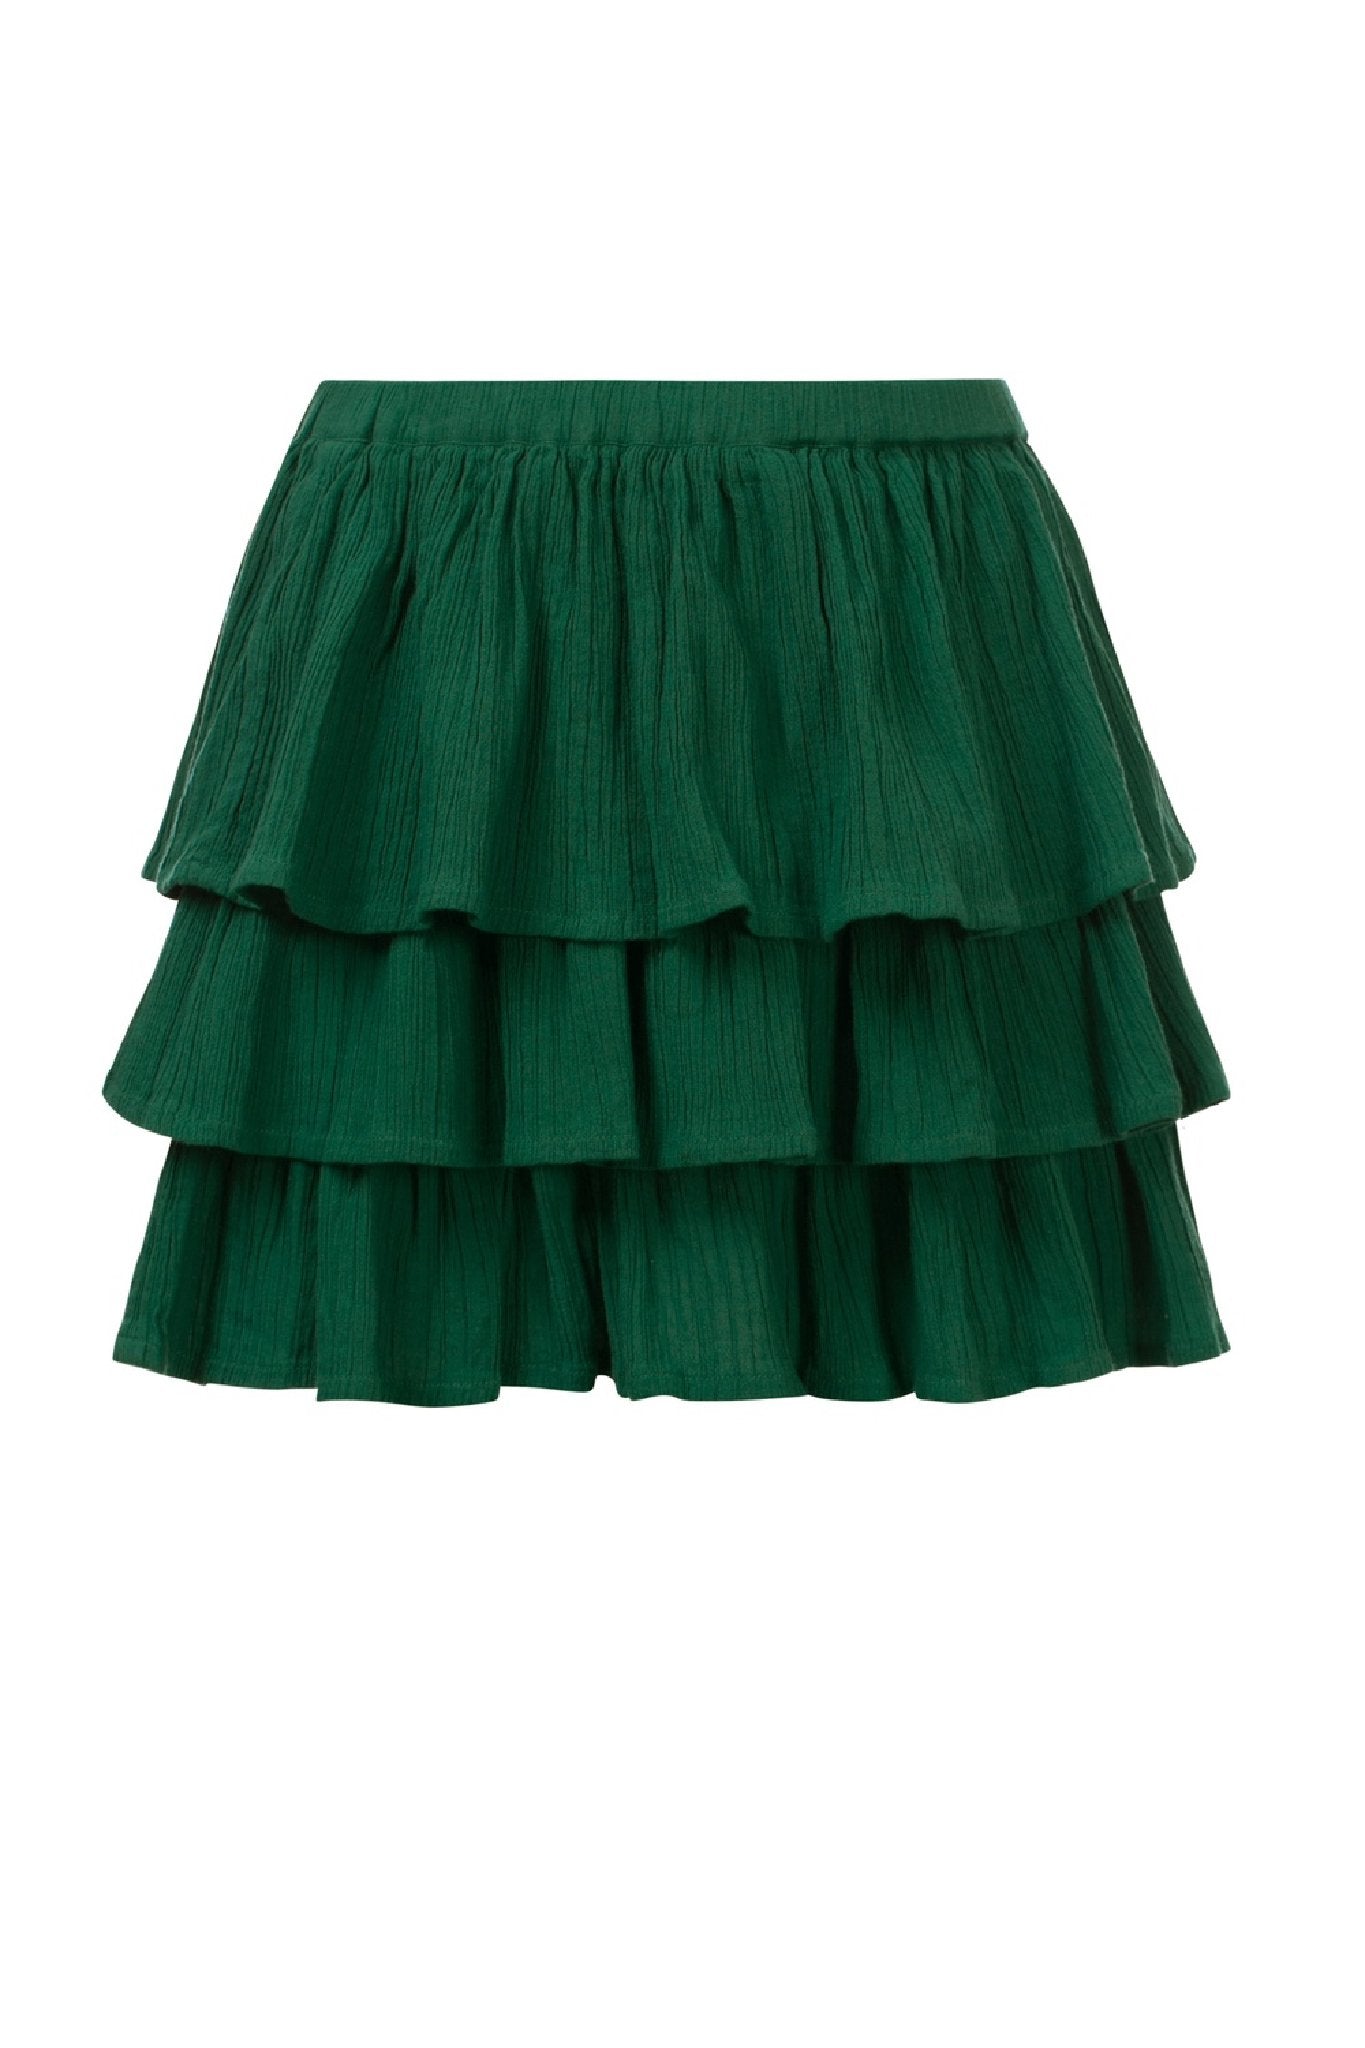 Meisjes Little woven 3 layered skirt van LOOXS Little in de kleur Palm in maat 128.